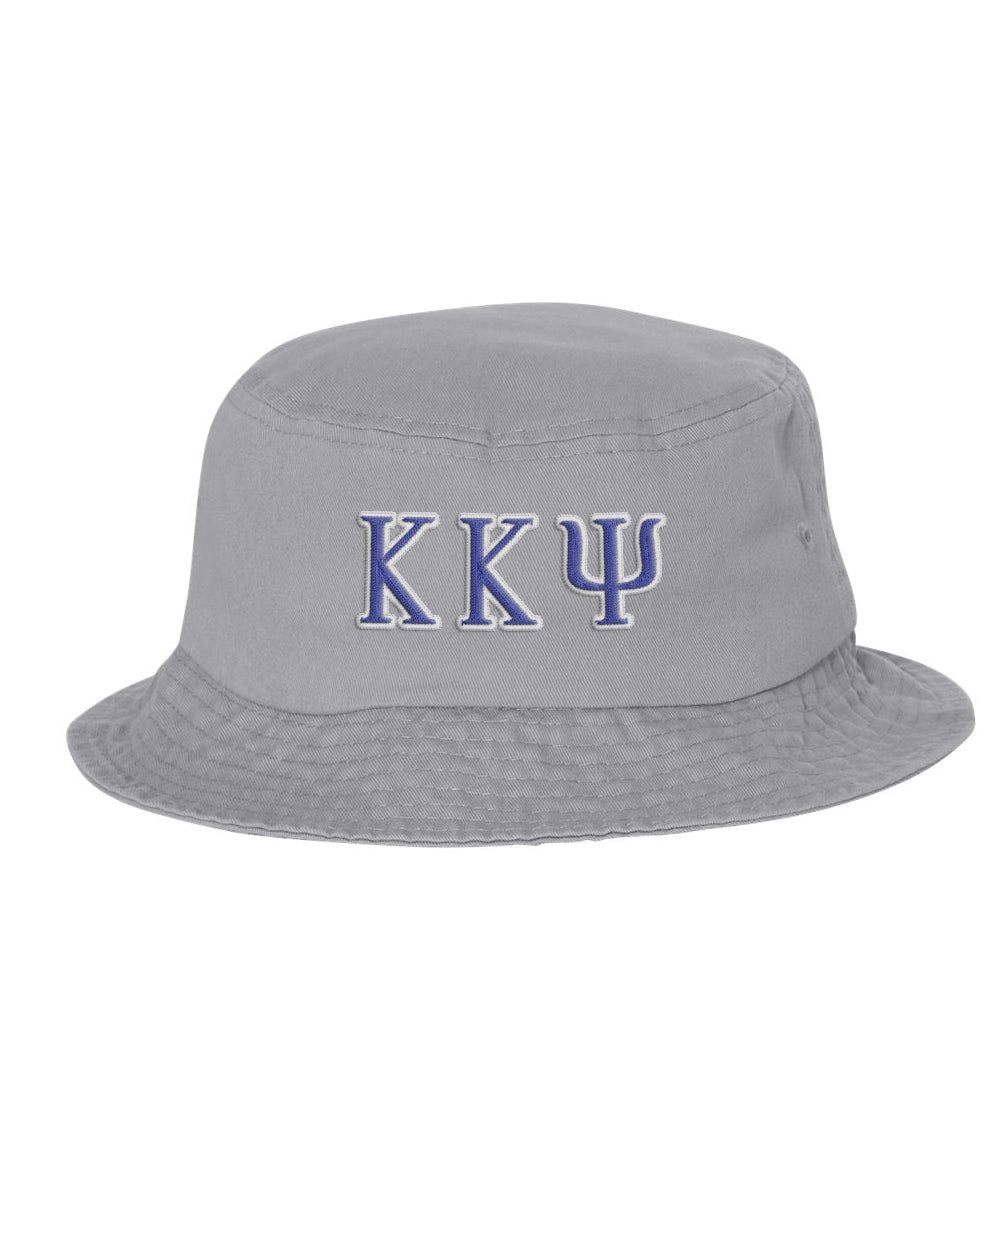 Kappa Kappa Psi Embroidered Bucket Hat